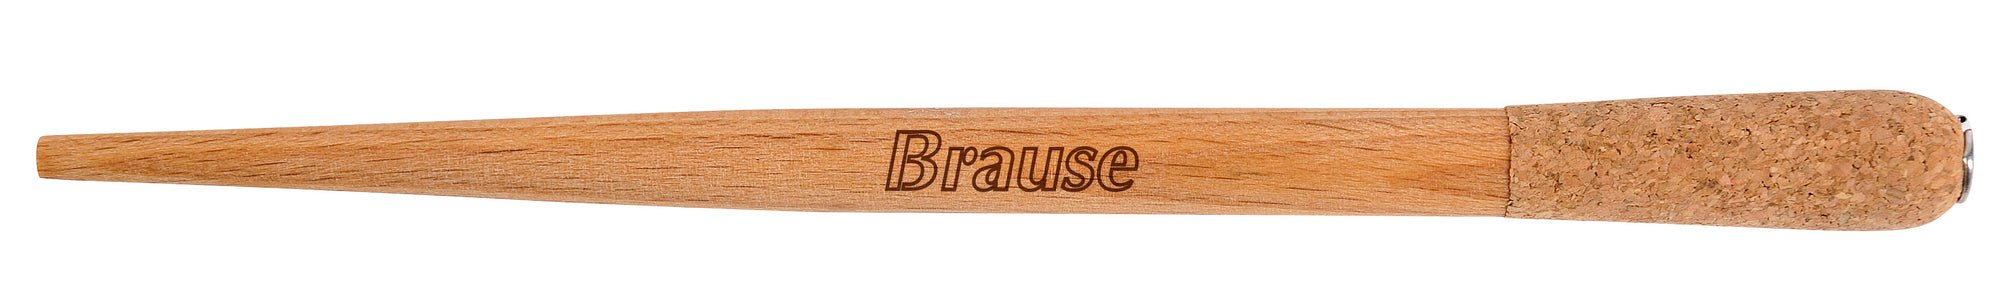 Brause wooden calligraphy nib holder